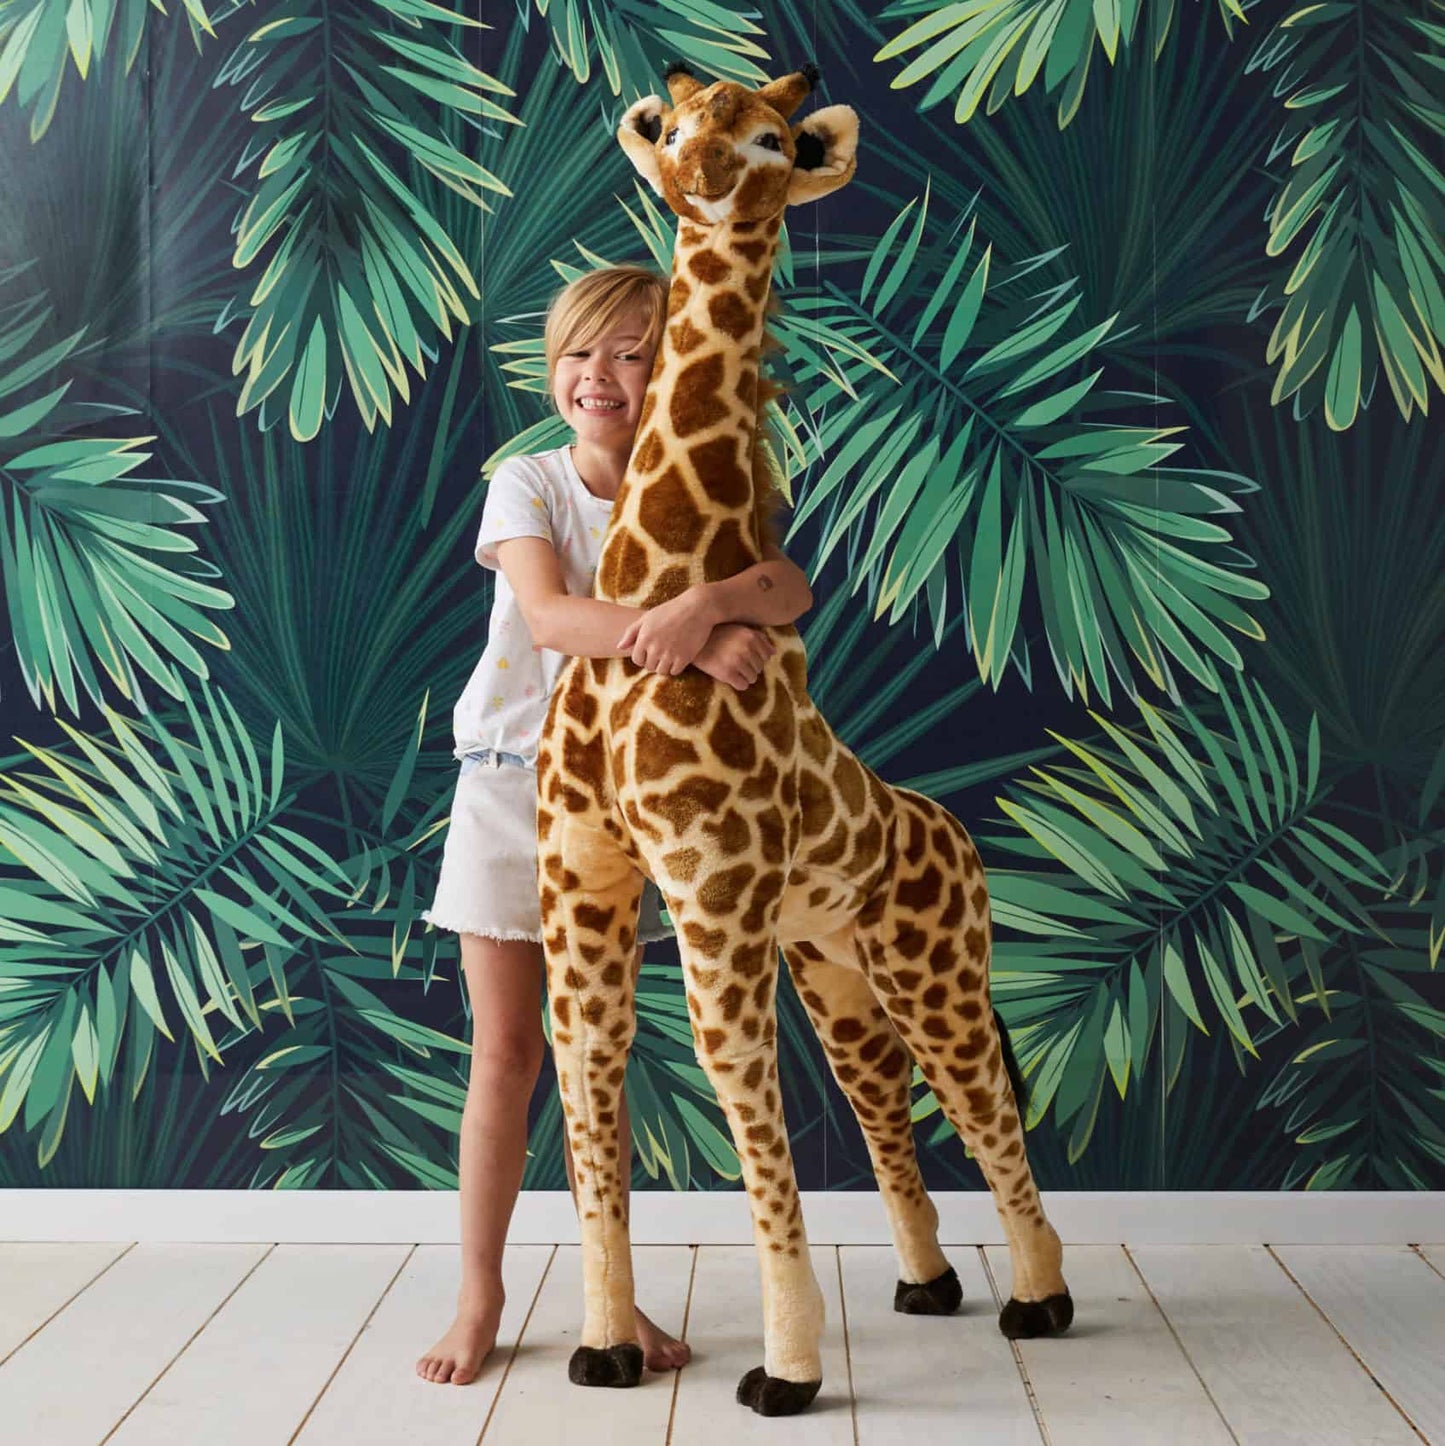 Giant Standing Giraffe by Jiggle & Giggle